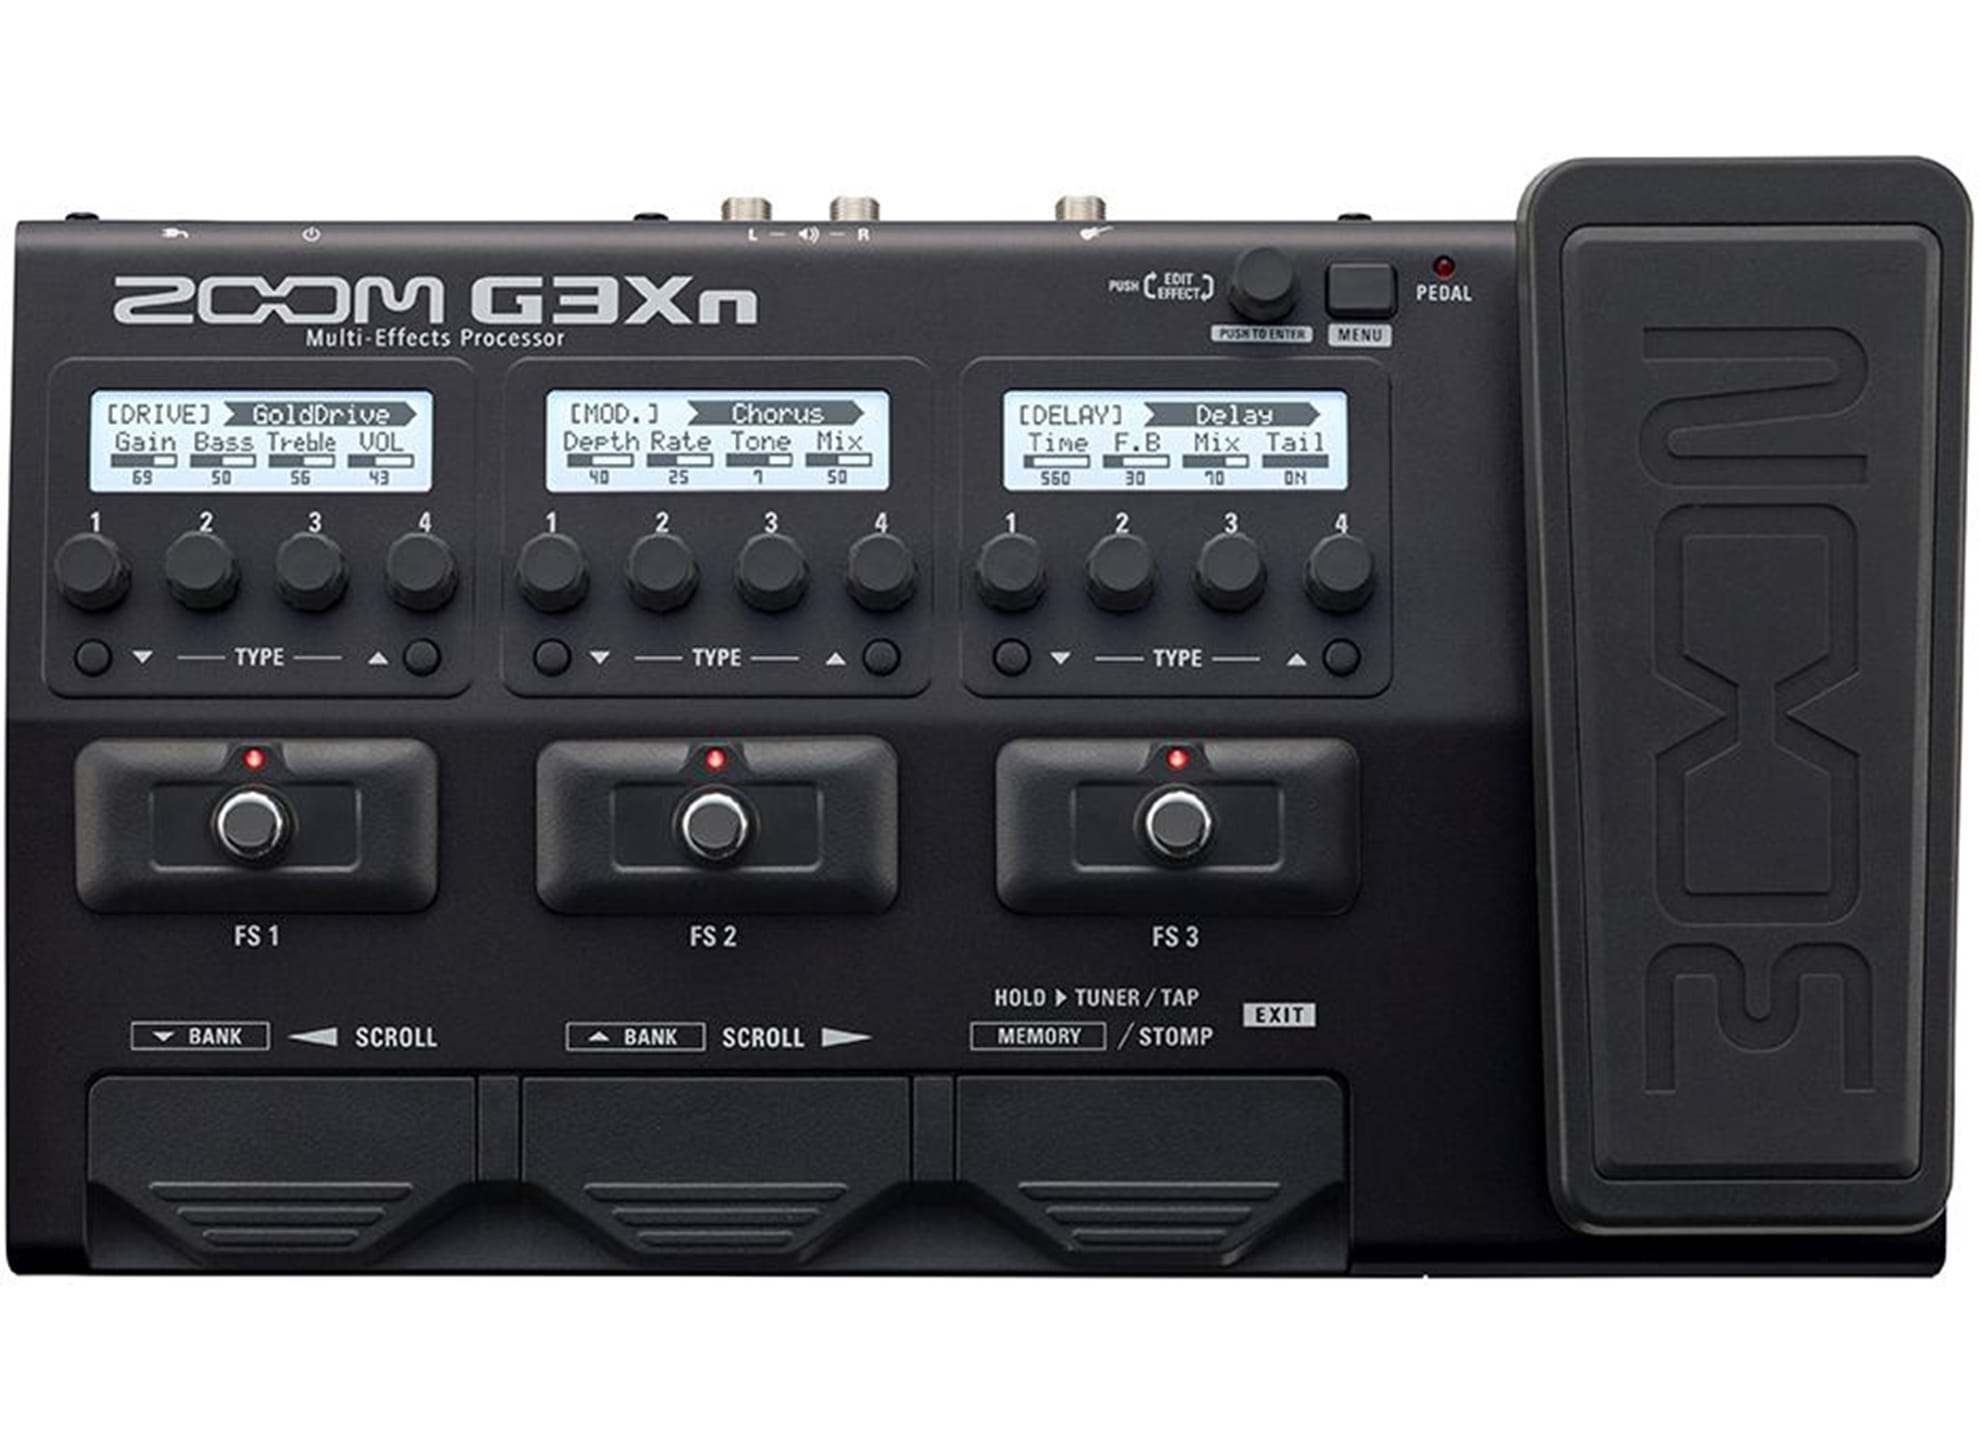 G3Xn Multi-Effects Processor